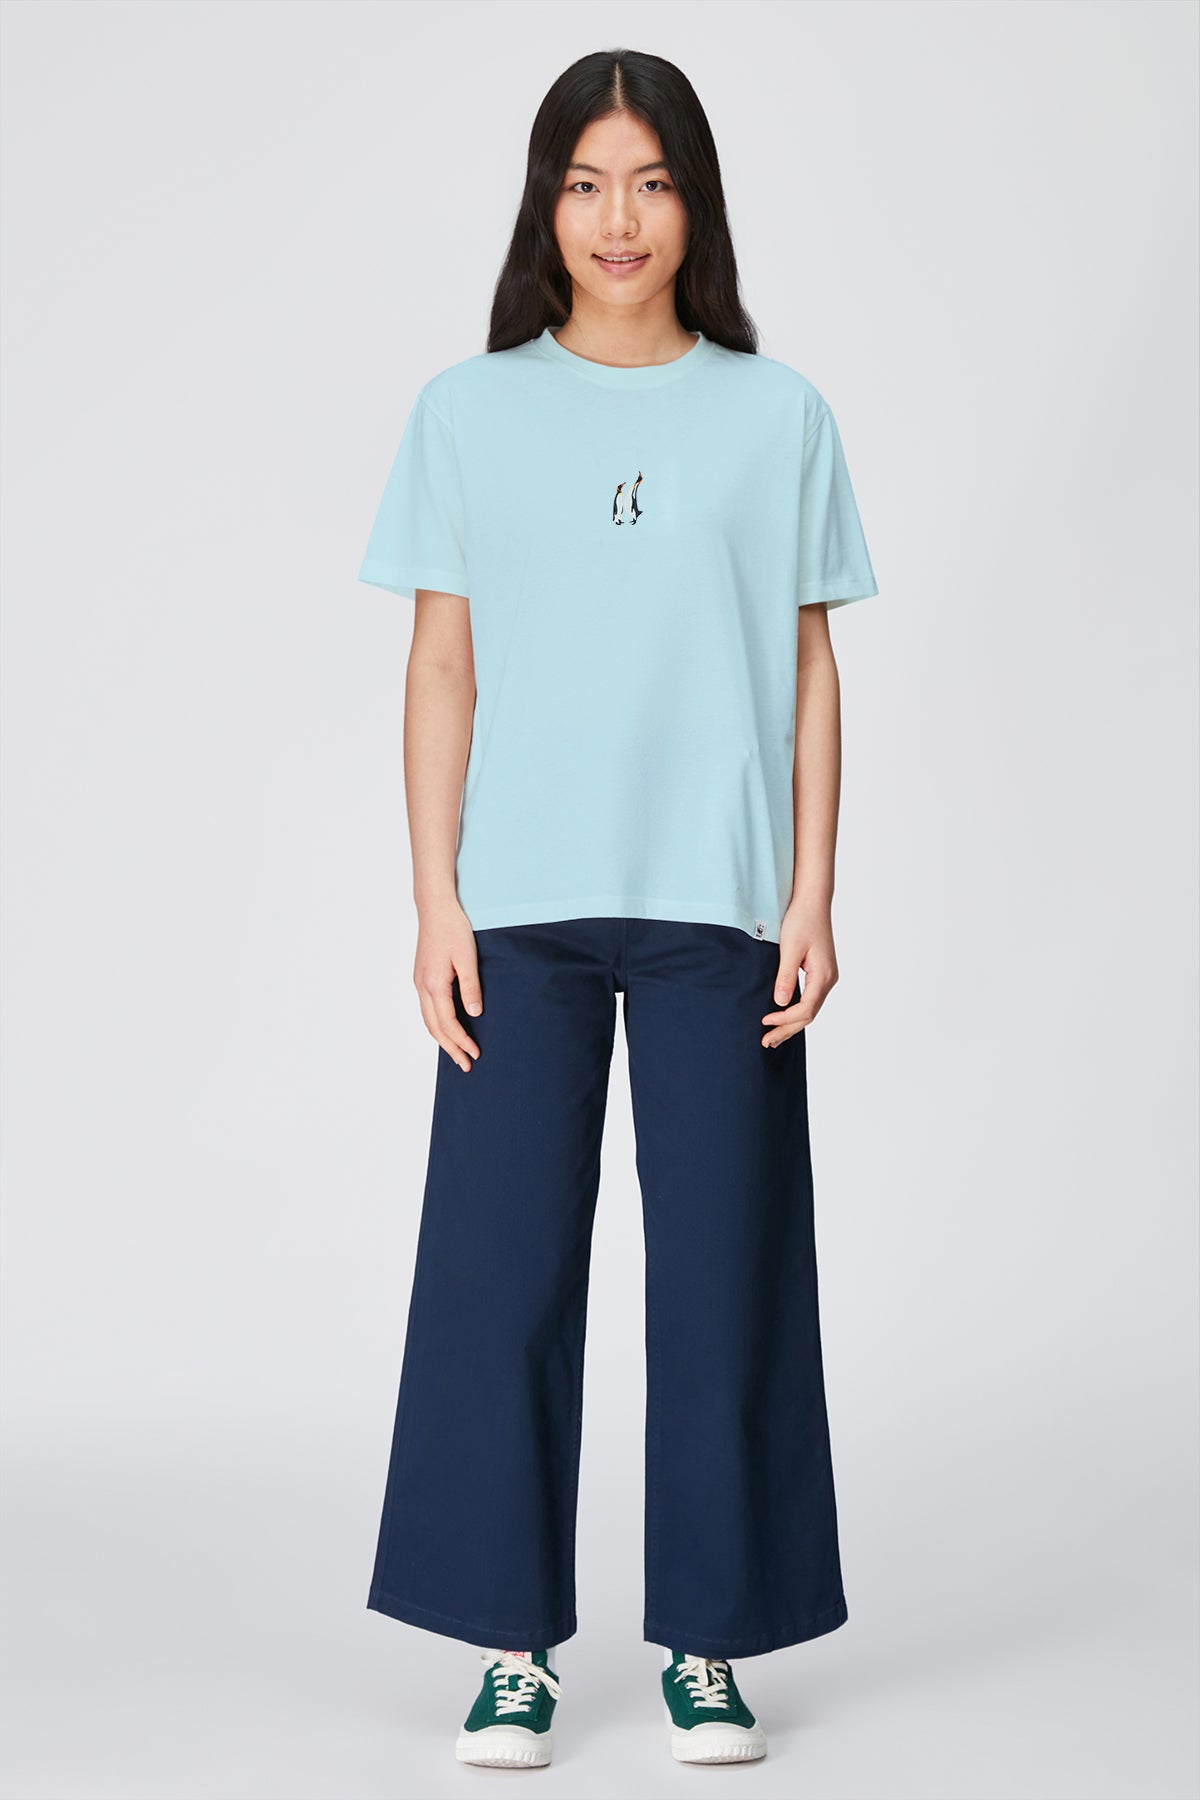 İmparator Penguen Light-Weight T-shirt - Mint Mavi